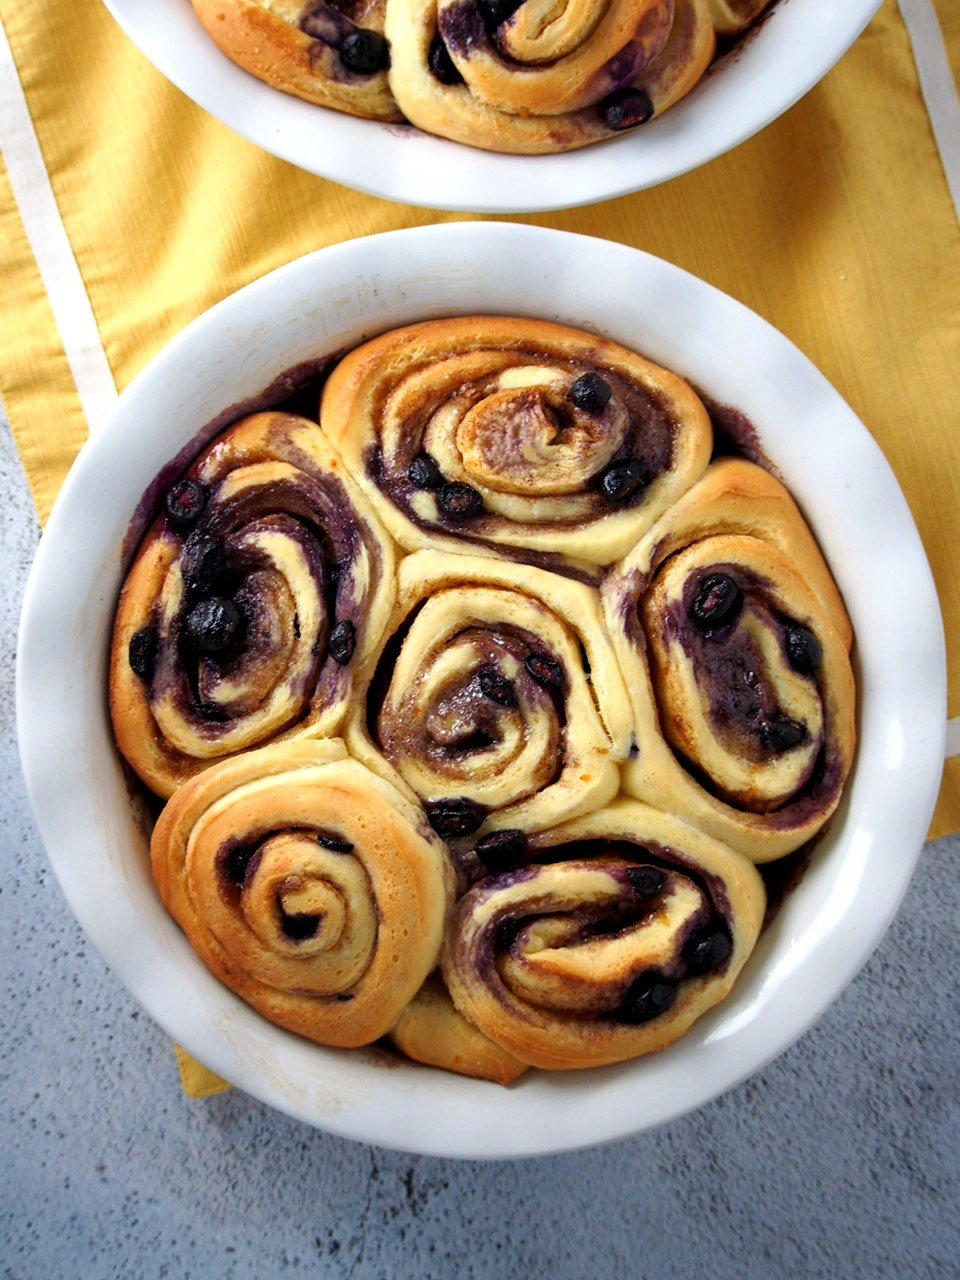 Freshly baked blueberry cinnamon rolls without the lemon glaze.